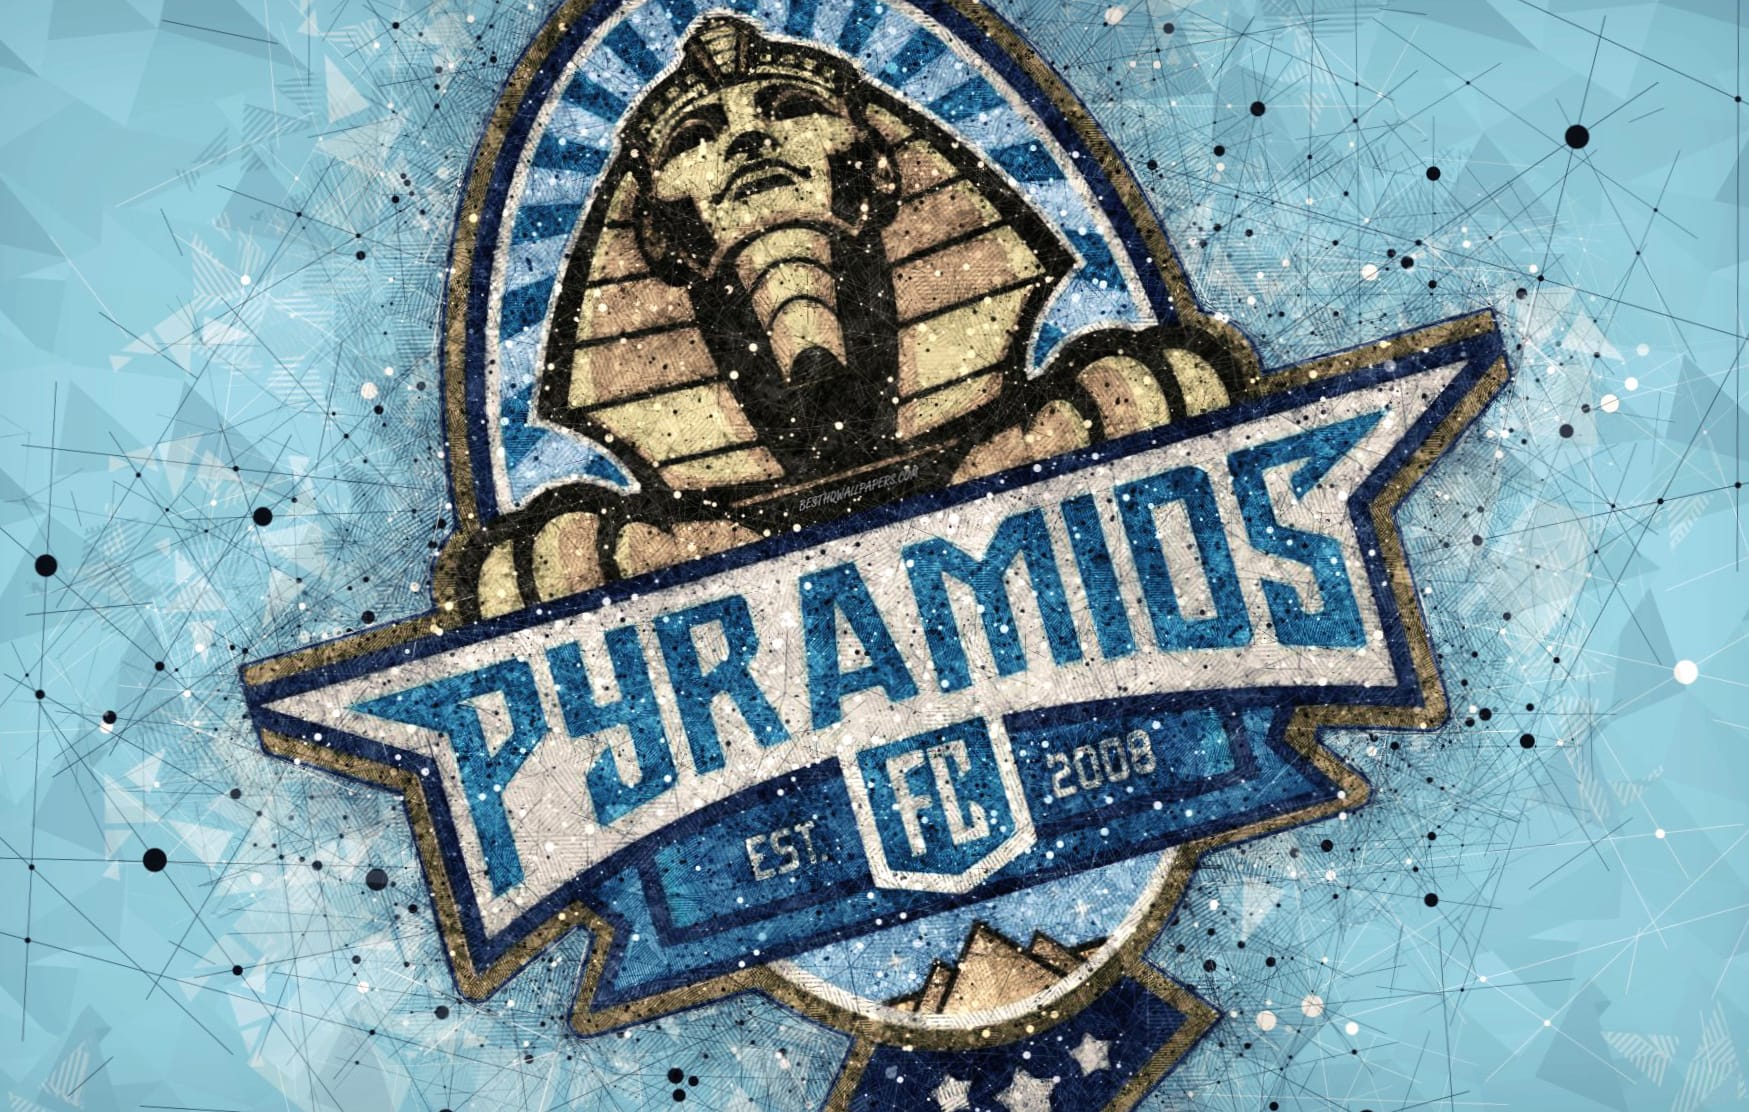 Pyramids FC at 1024 x 1024 iPad size wallpapers HD quality